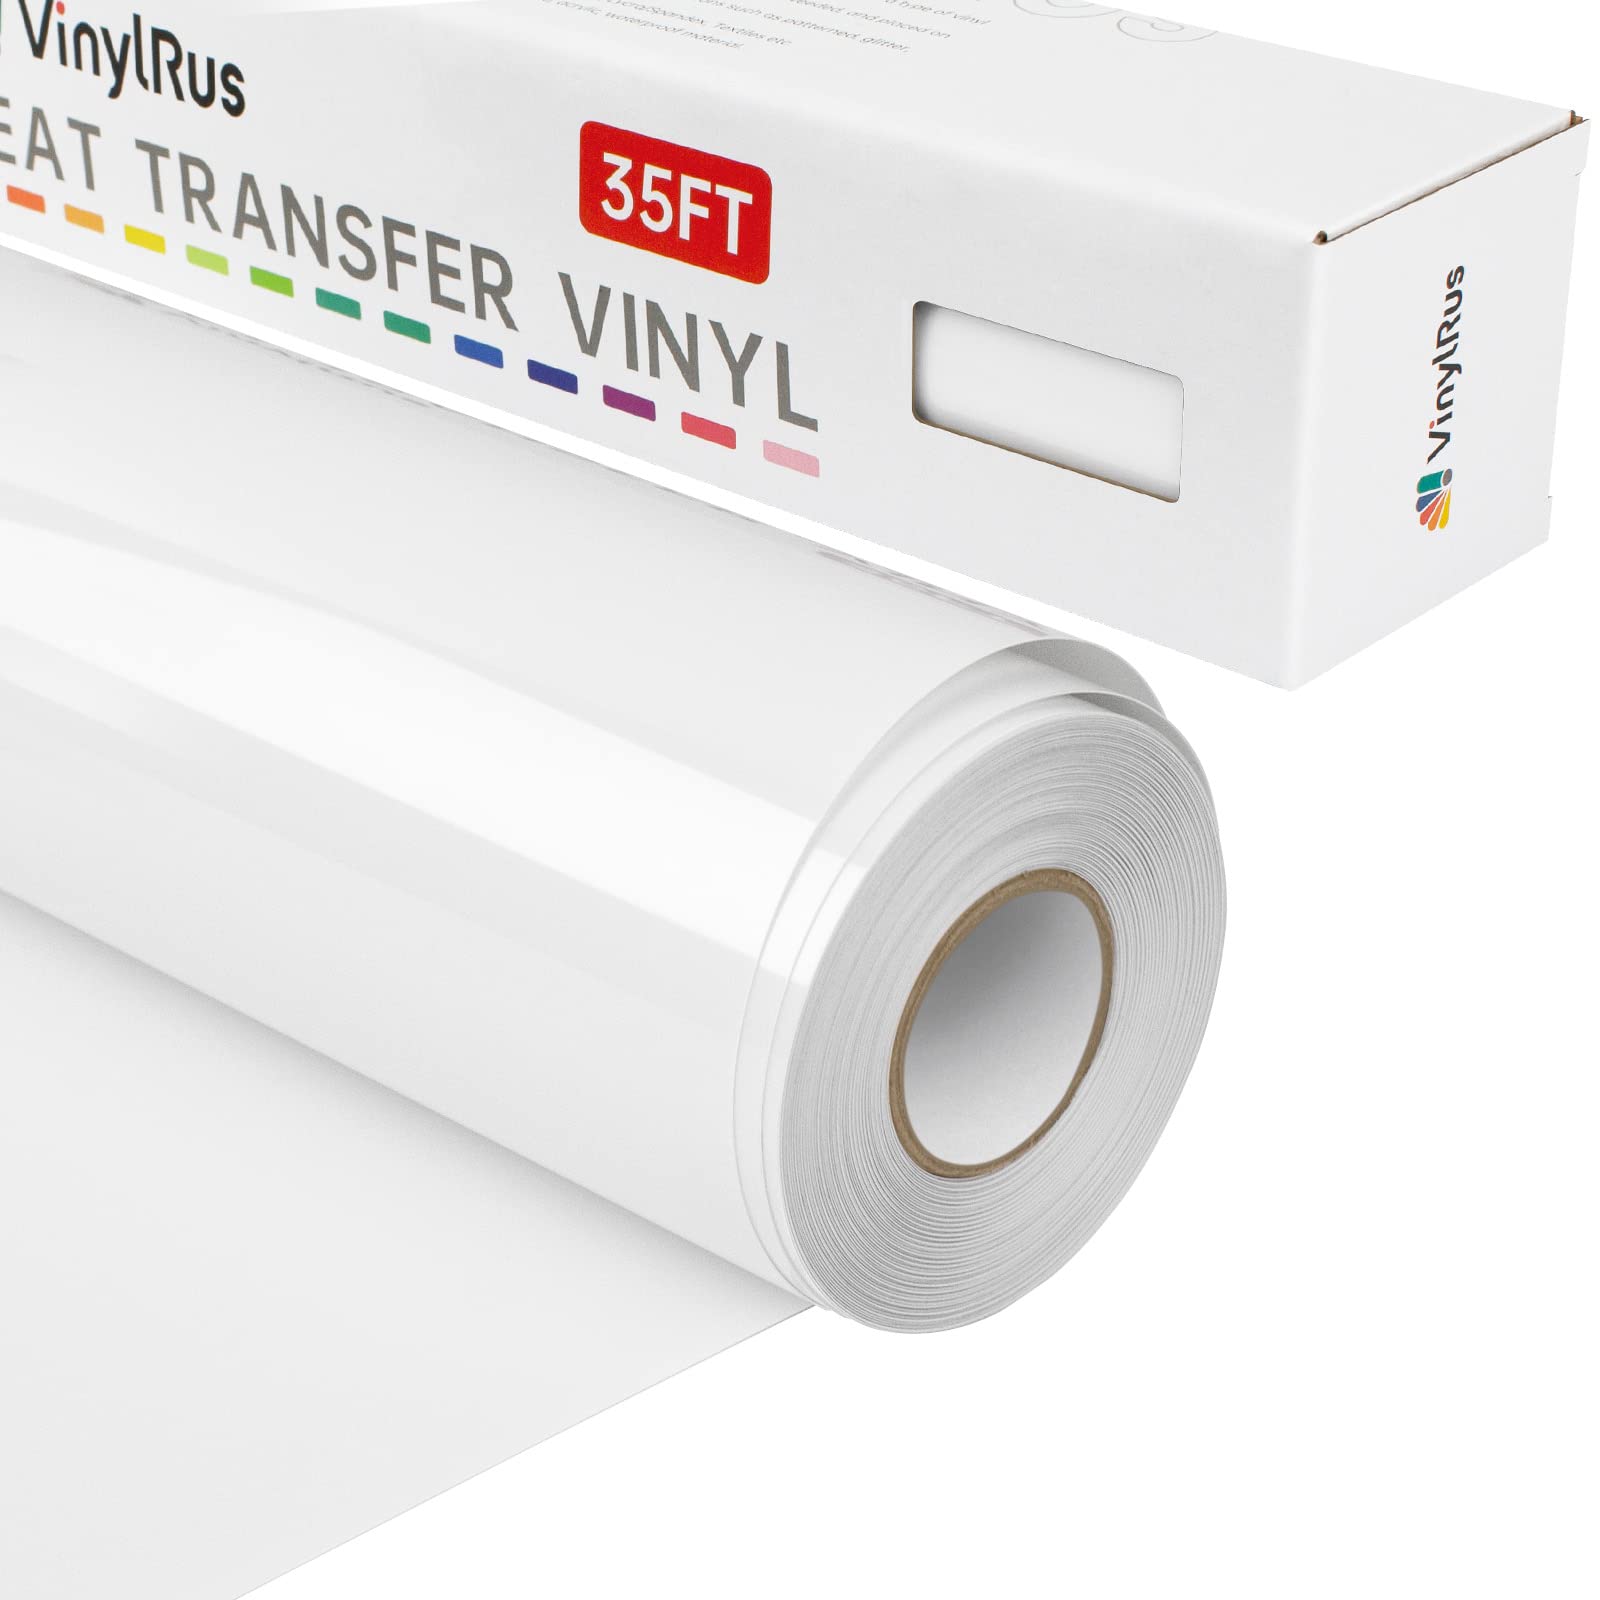 VinylRus Glitter Heat Transfer Vinyl Rolls-10 x 8ft Red Iron on